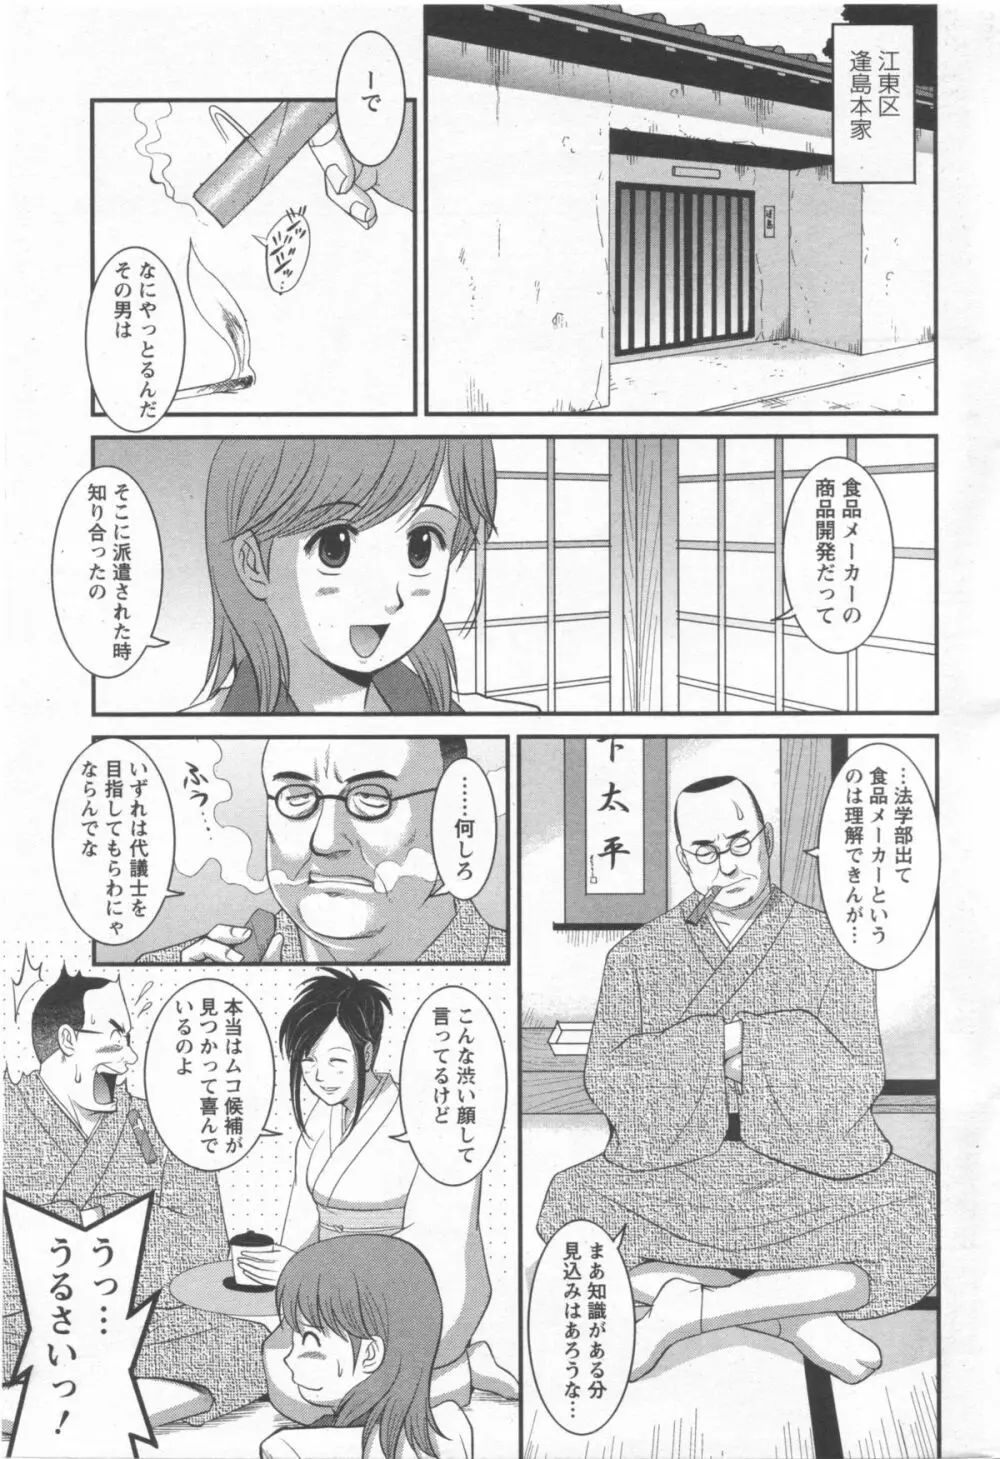 Haken no Muuko-san 10 6ページ